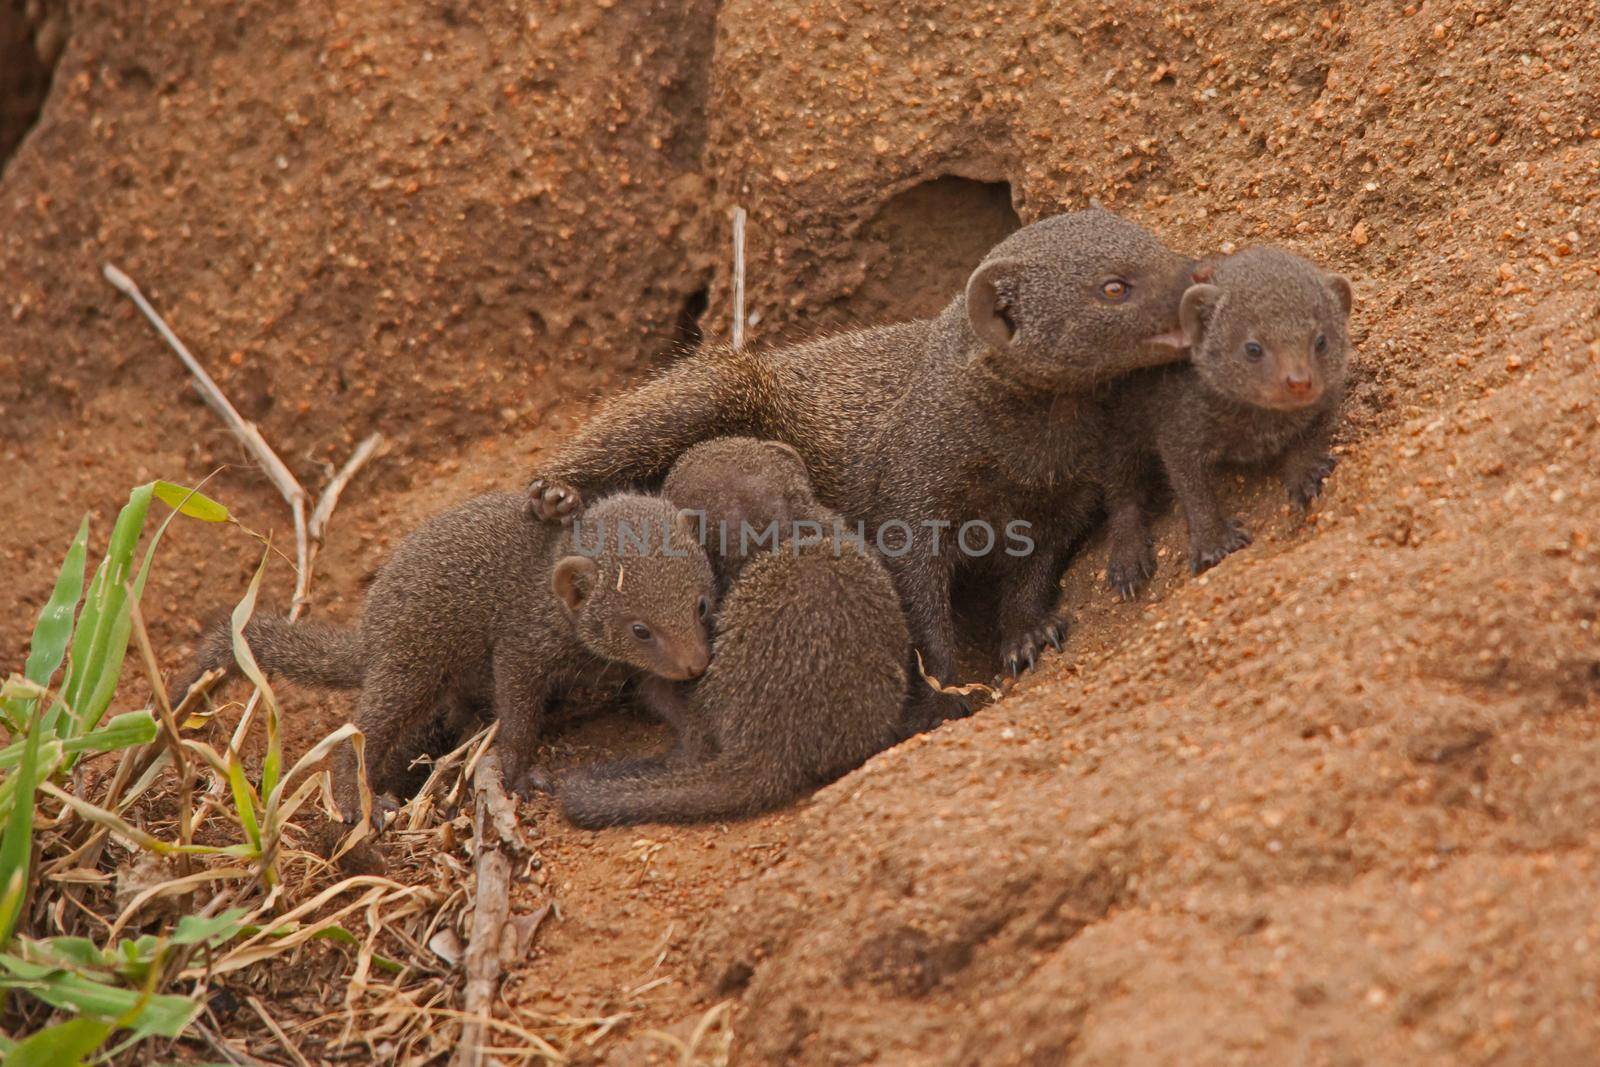 Dwarf Mongoose (Helogale parvula) 13826 by kobus_peche